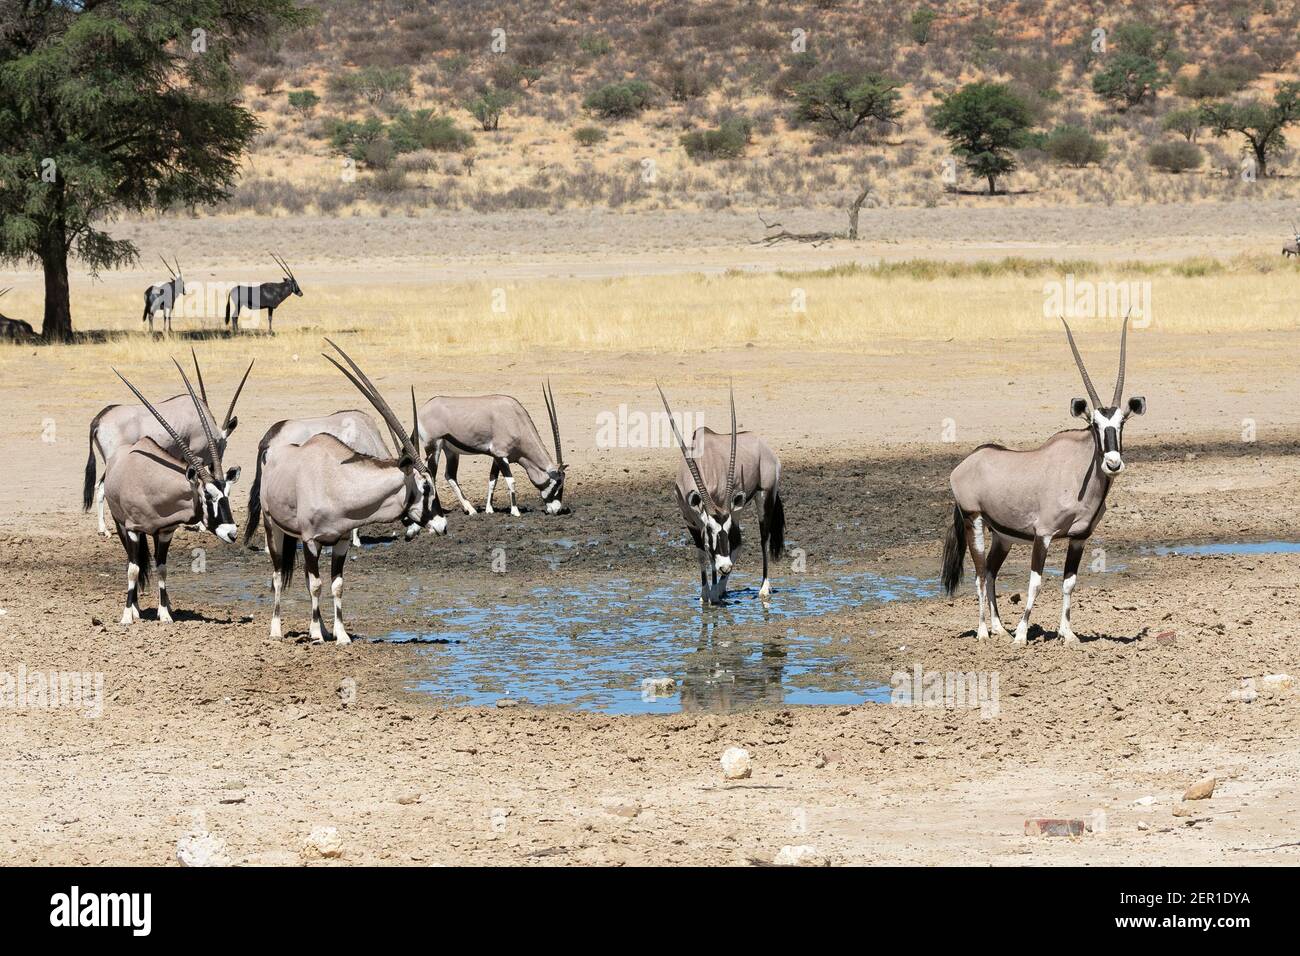 Gemsbok or Gemsbuck (Oryx gazella) drinking in a large rain puddle,  Kgalagadi Transfrontier Park, Kalahari, Northern Cape, South Africa Stock Photo